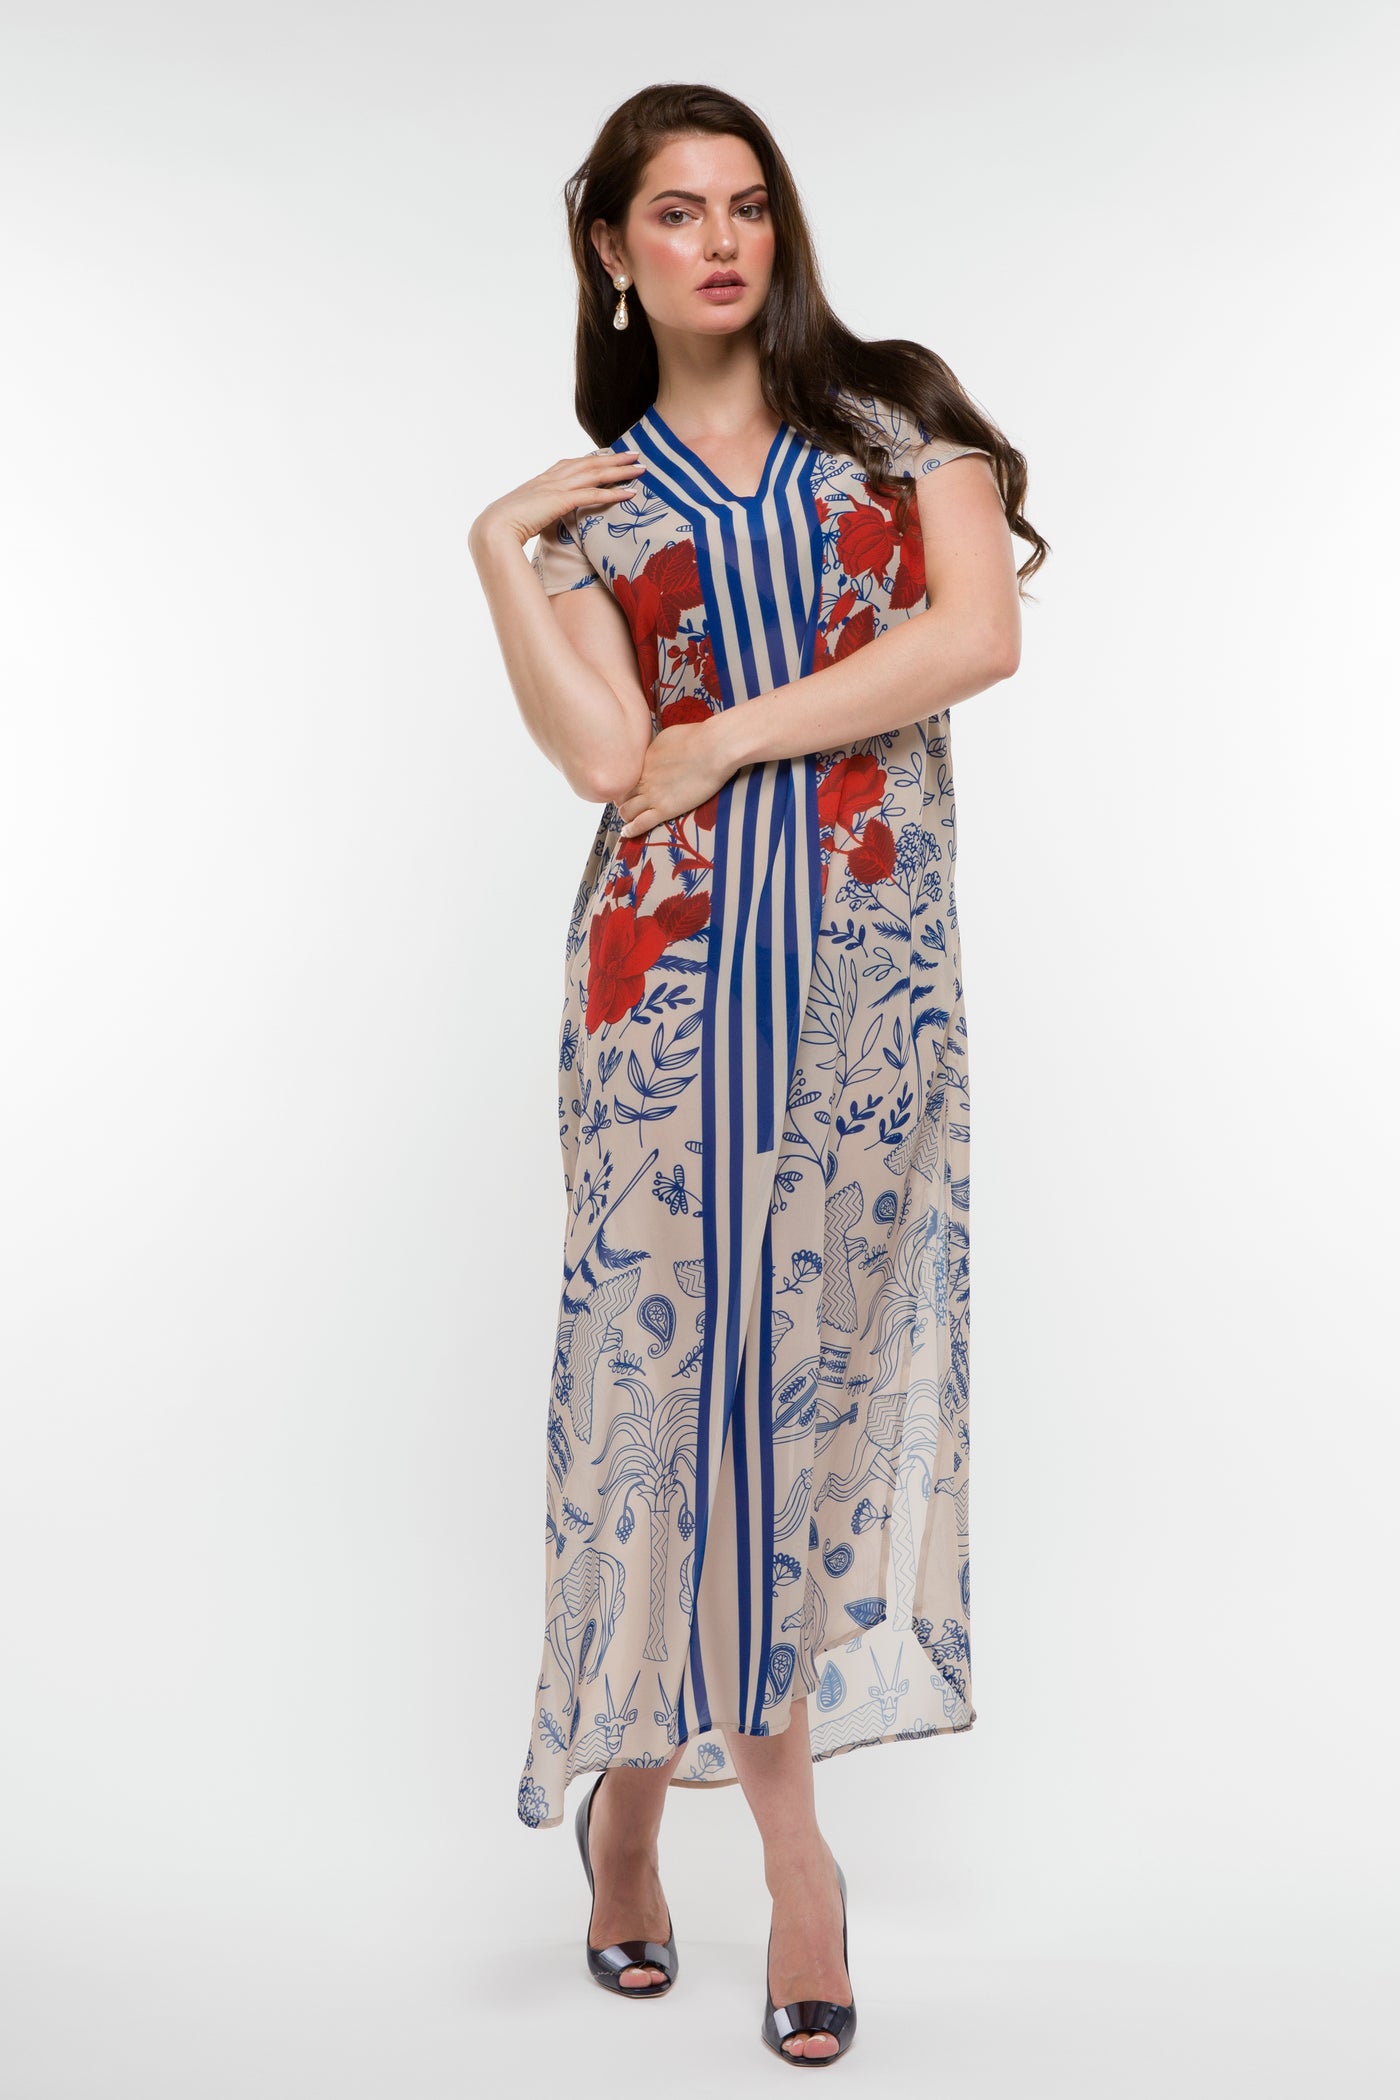 Tazhou Dress 18F-028